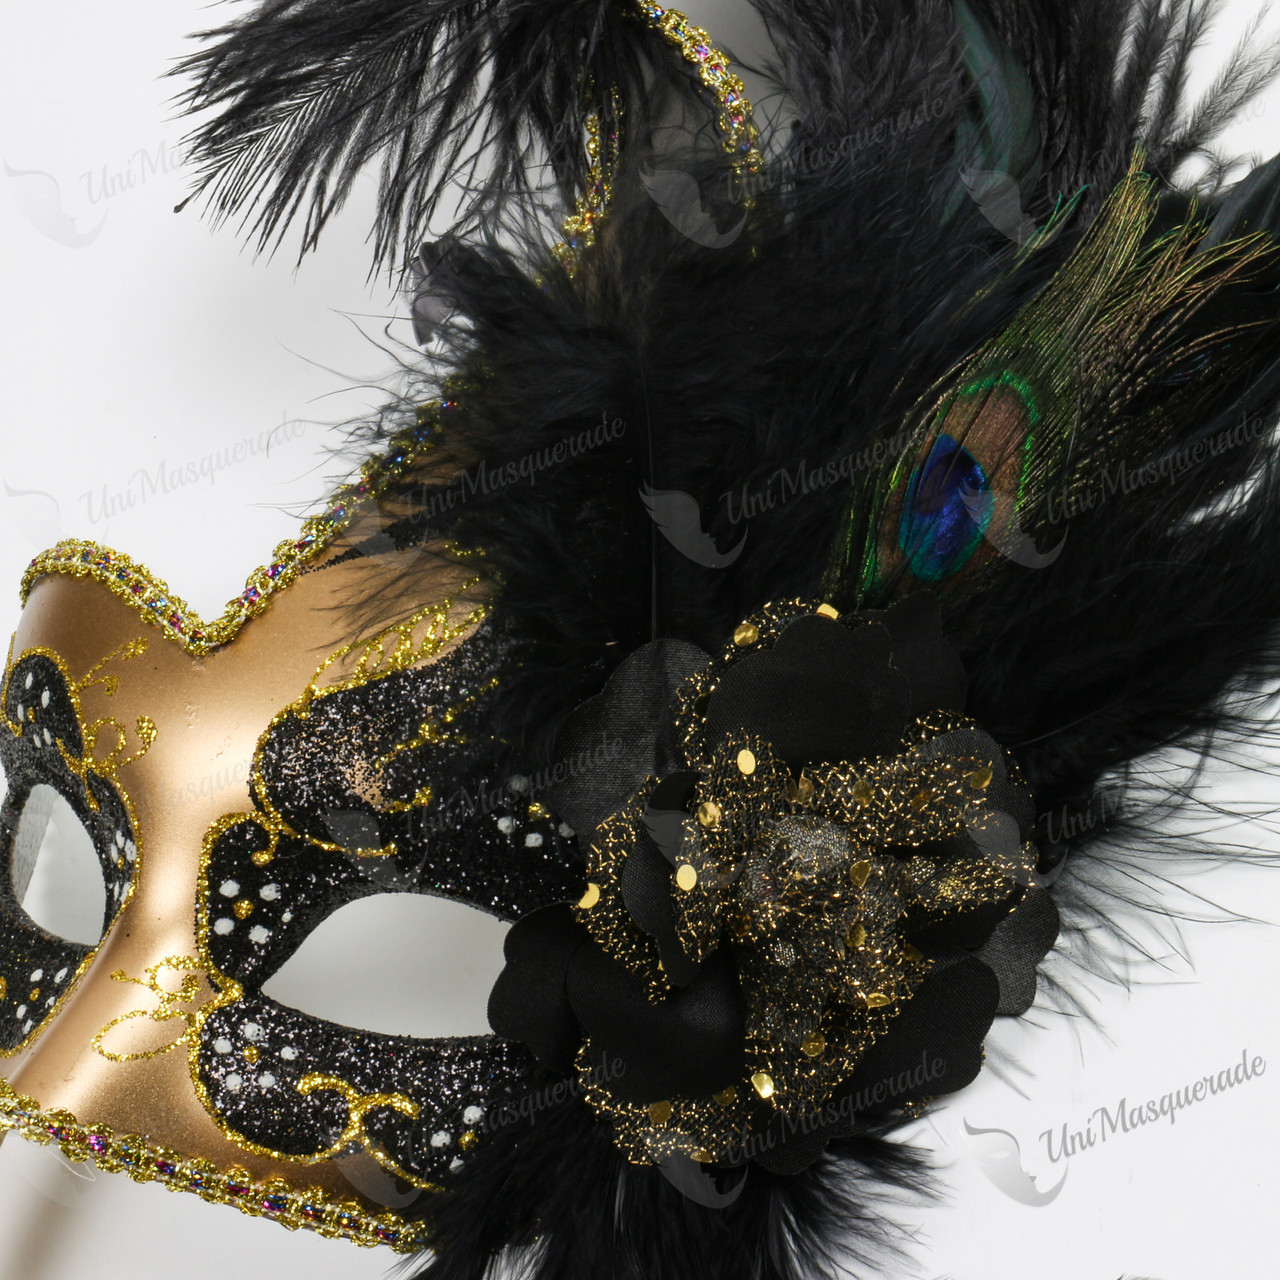 Gold Masquerade Mask - Masquerade Mask 